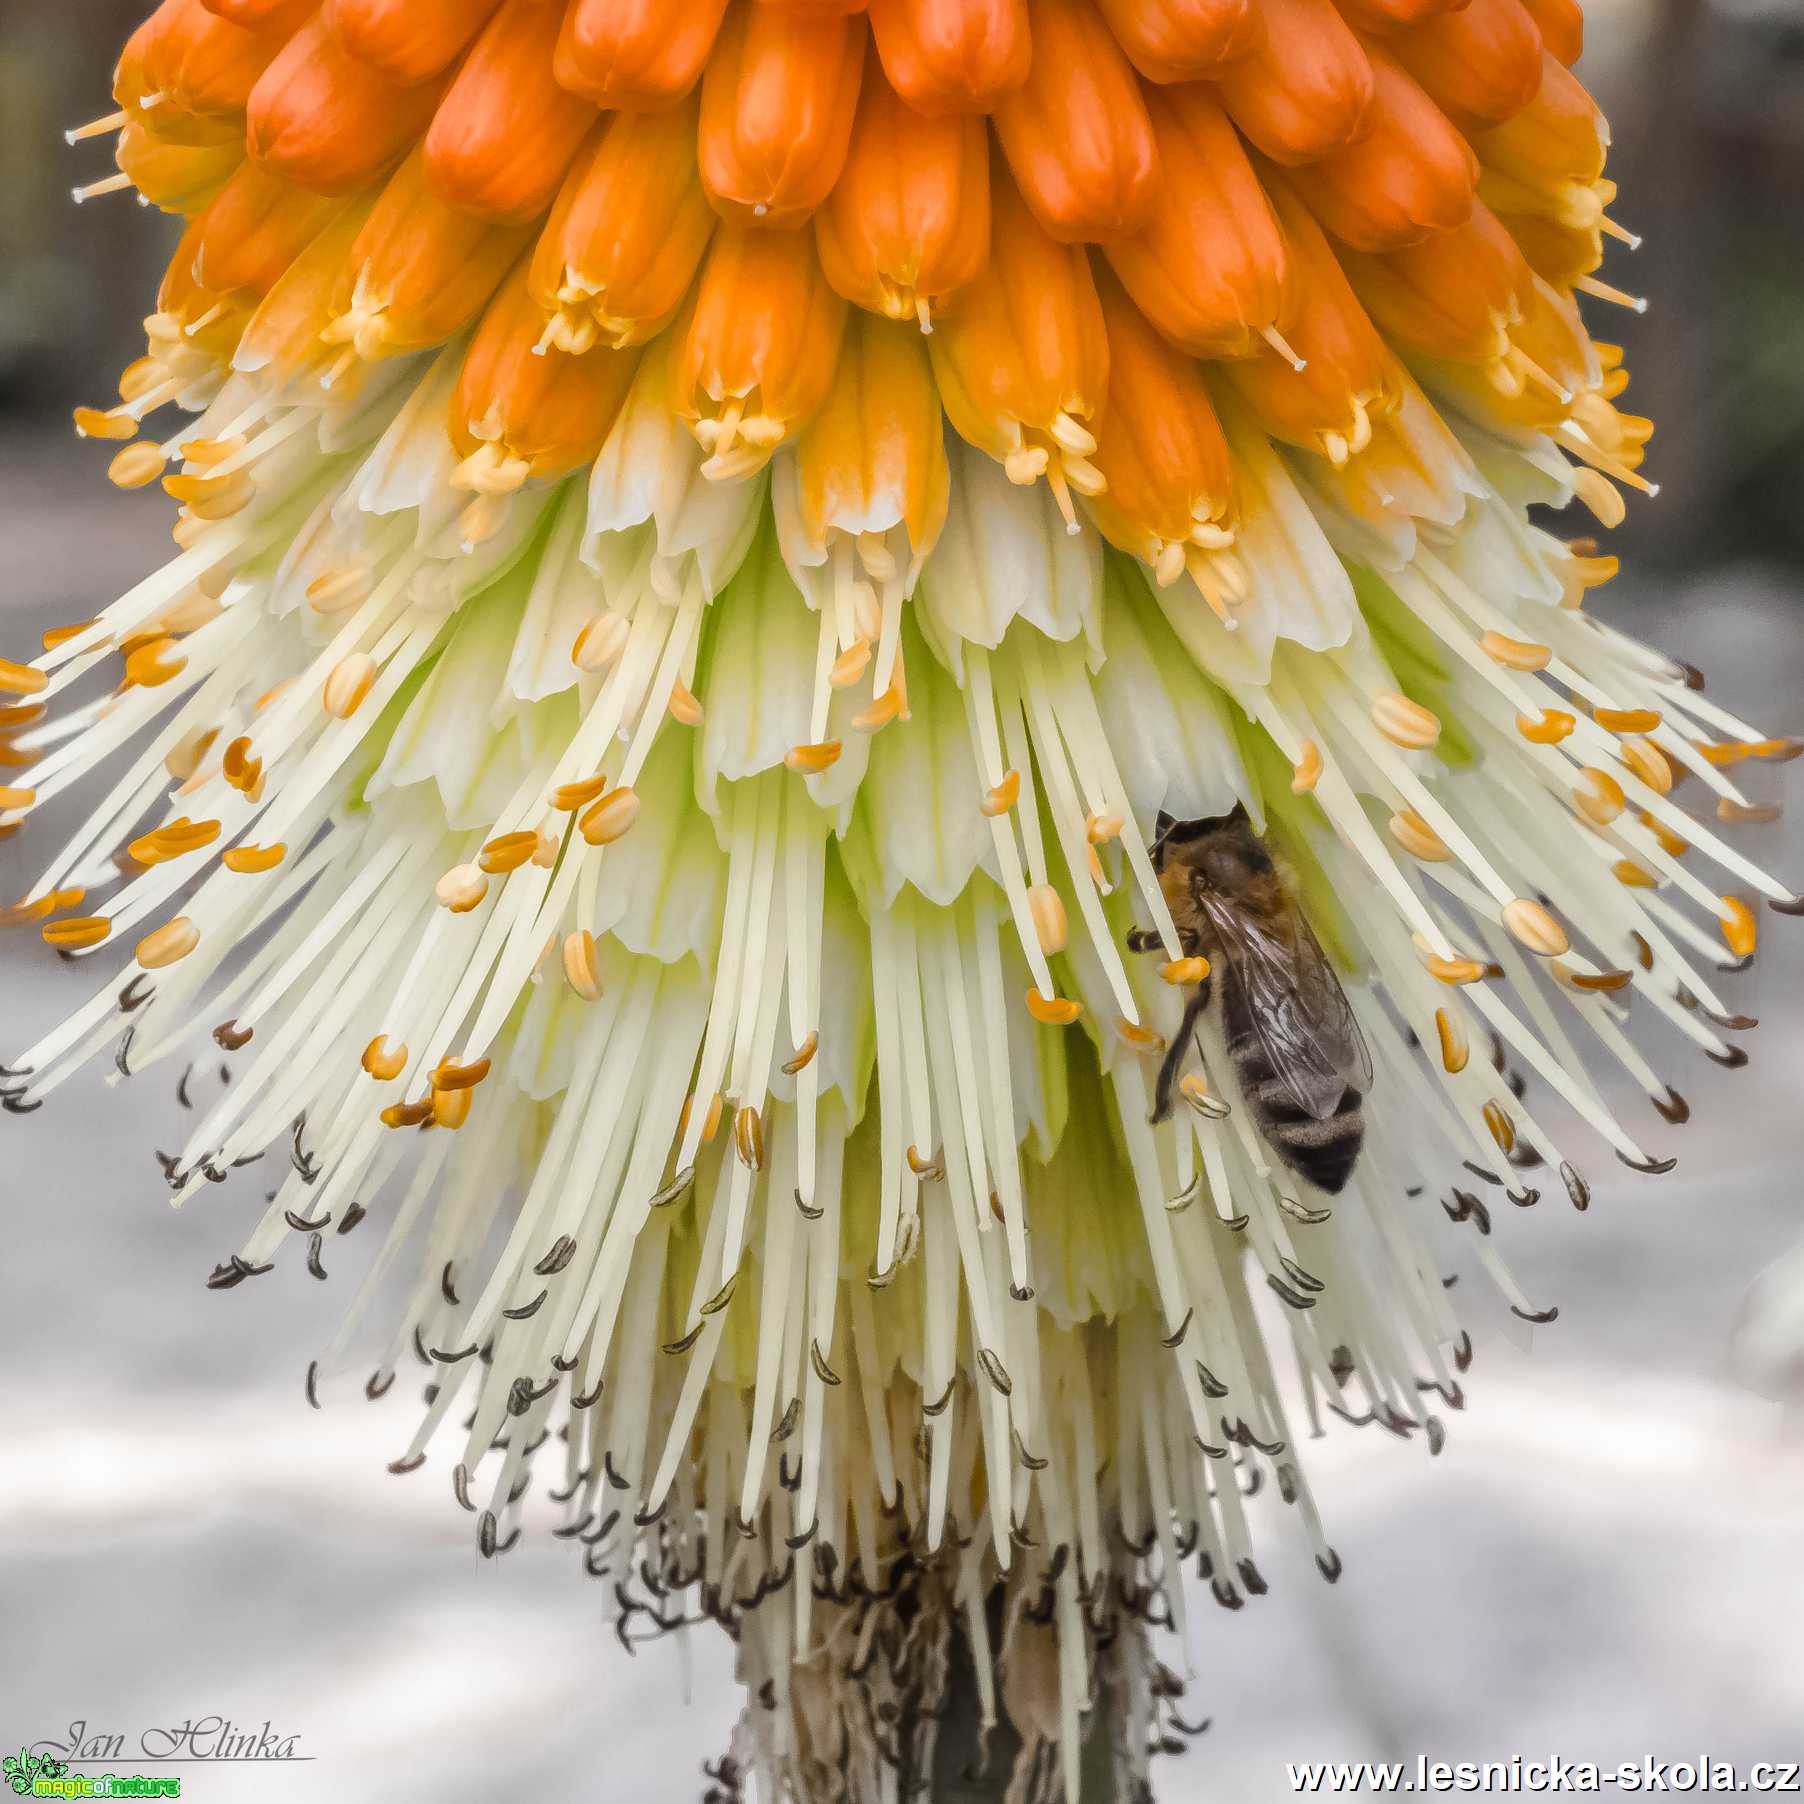 Včelka na nektaru - Foto Jan Hlinka 0921 (1)